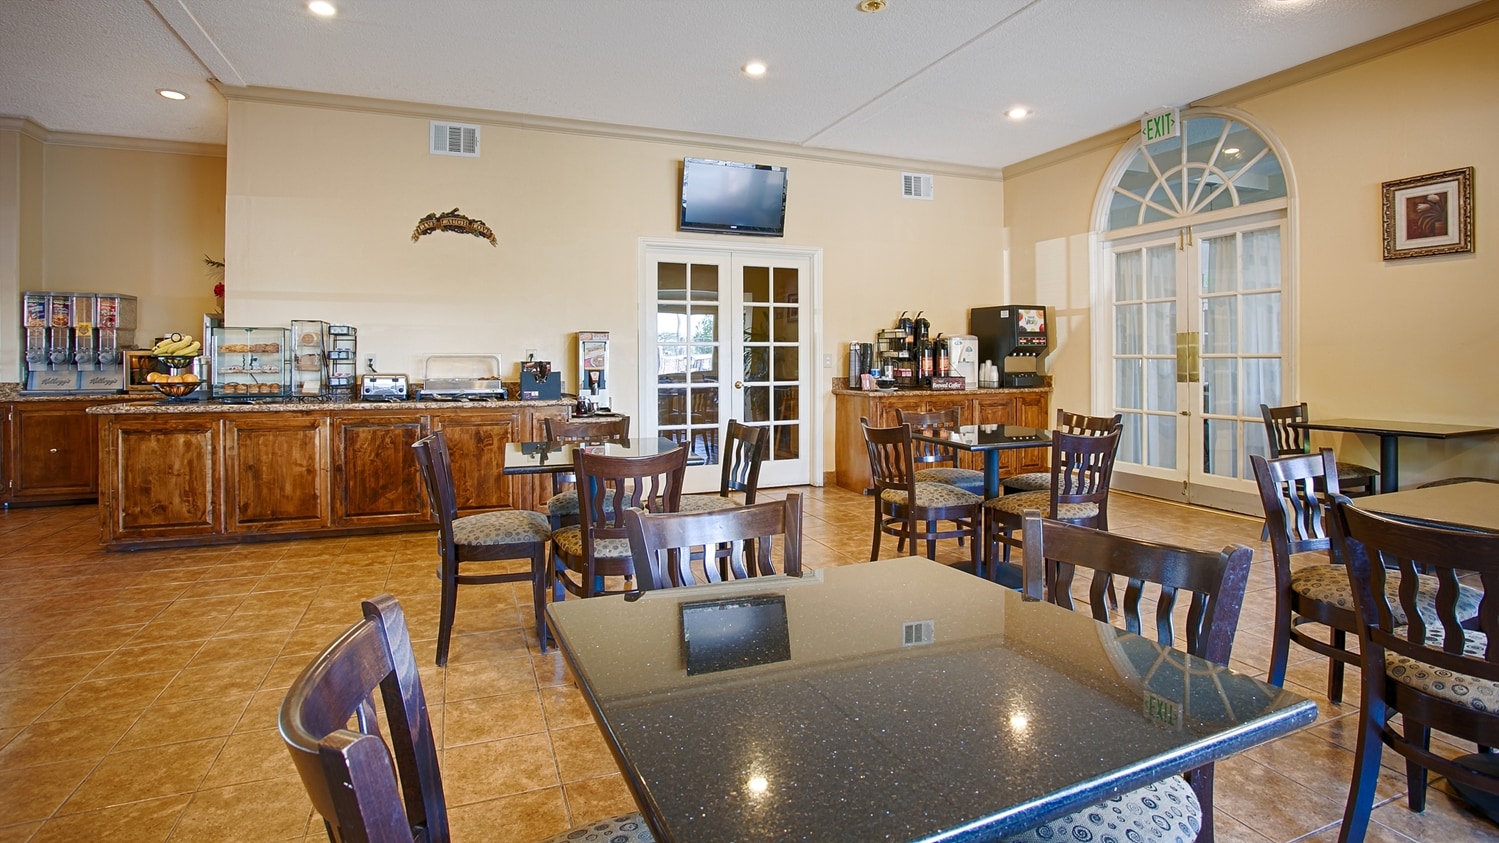 GRANDMA'S KITCHEN, Monterey - Restaurant Reviews, Photos & Phone Number -  Tripadvisor